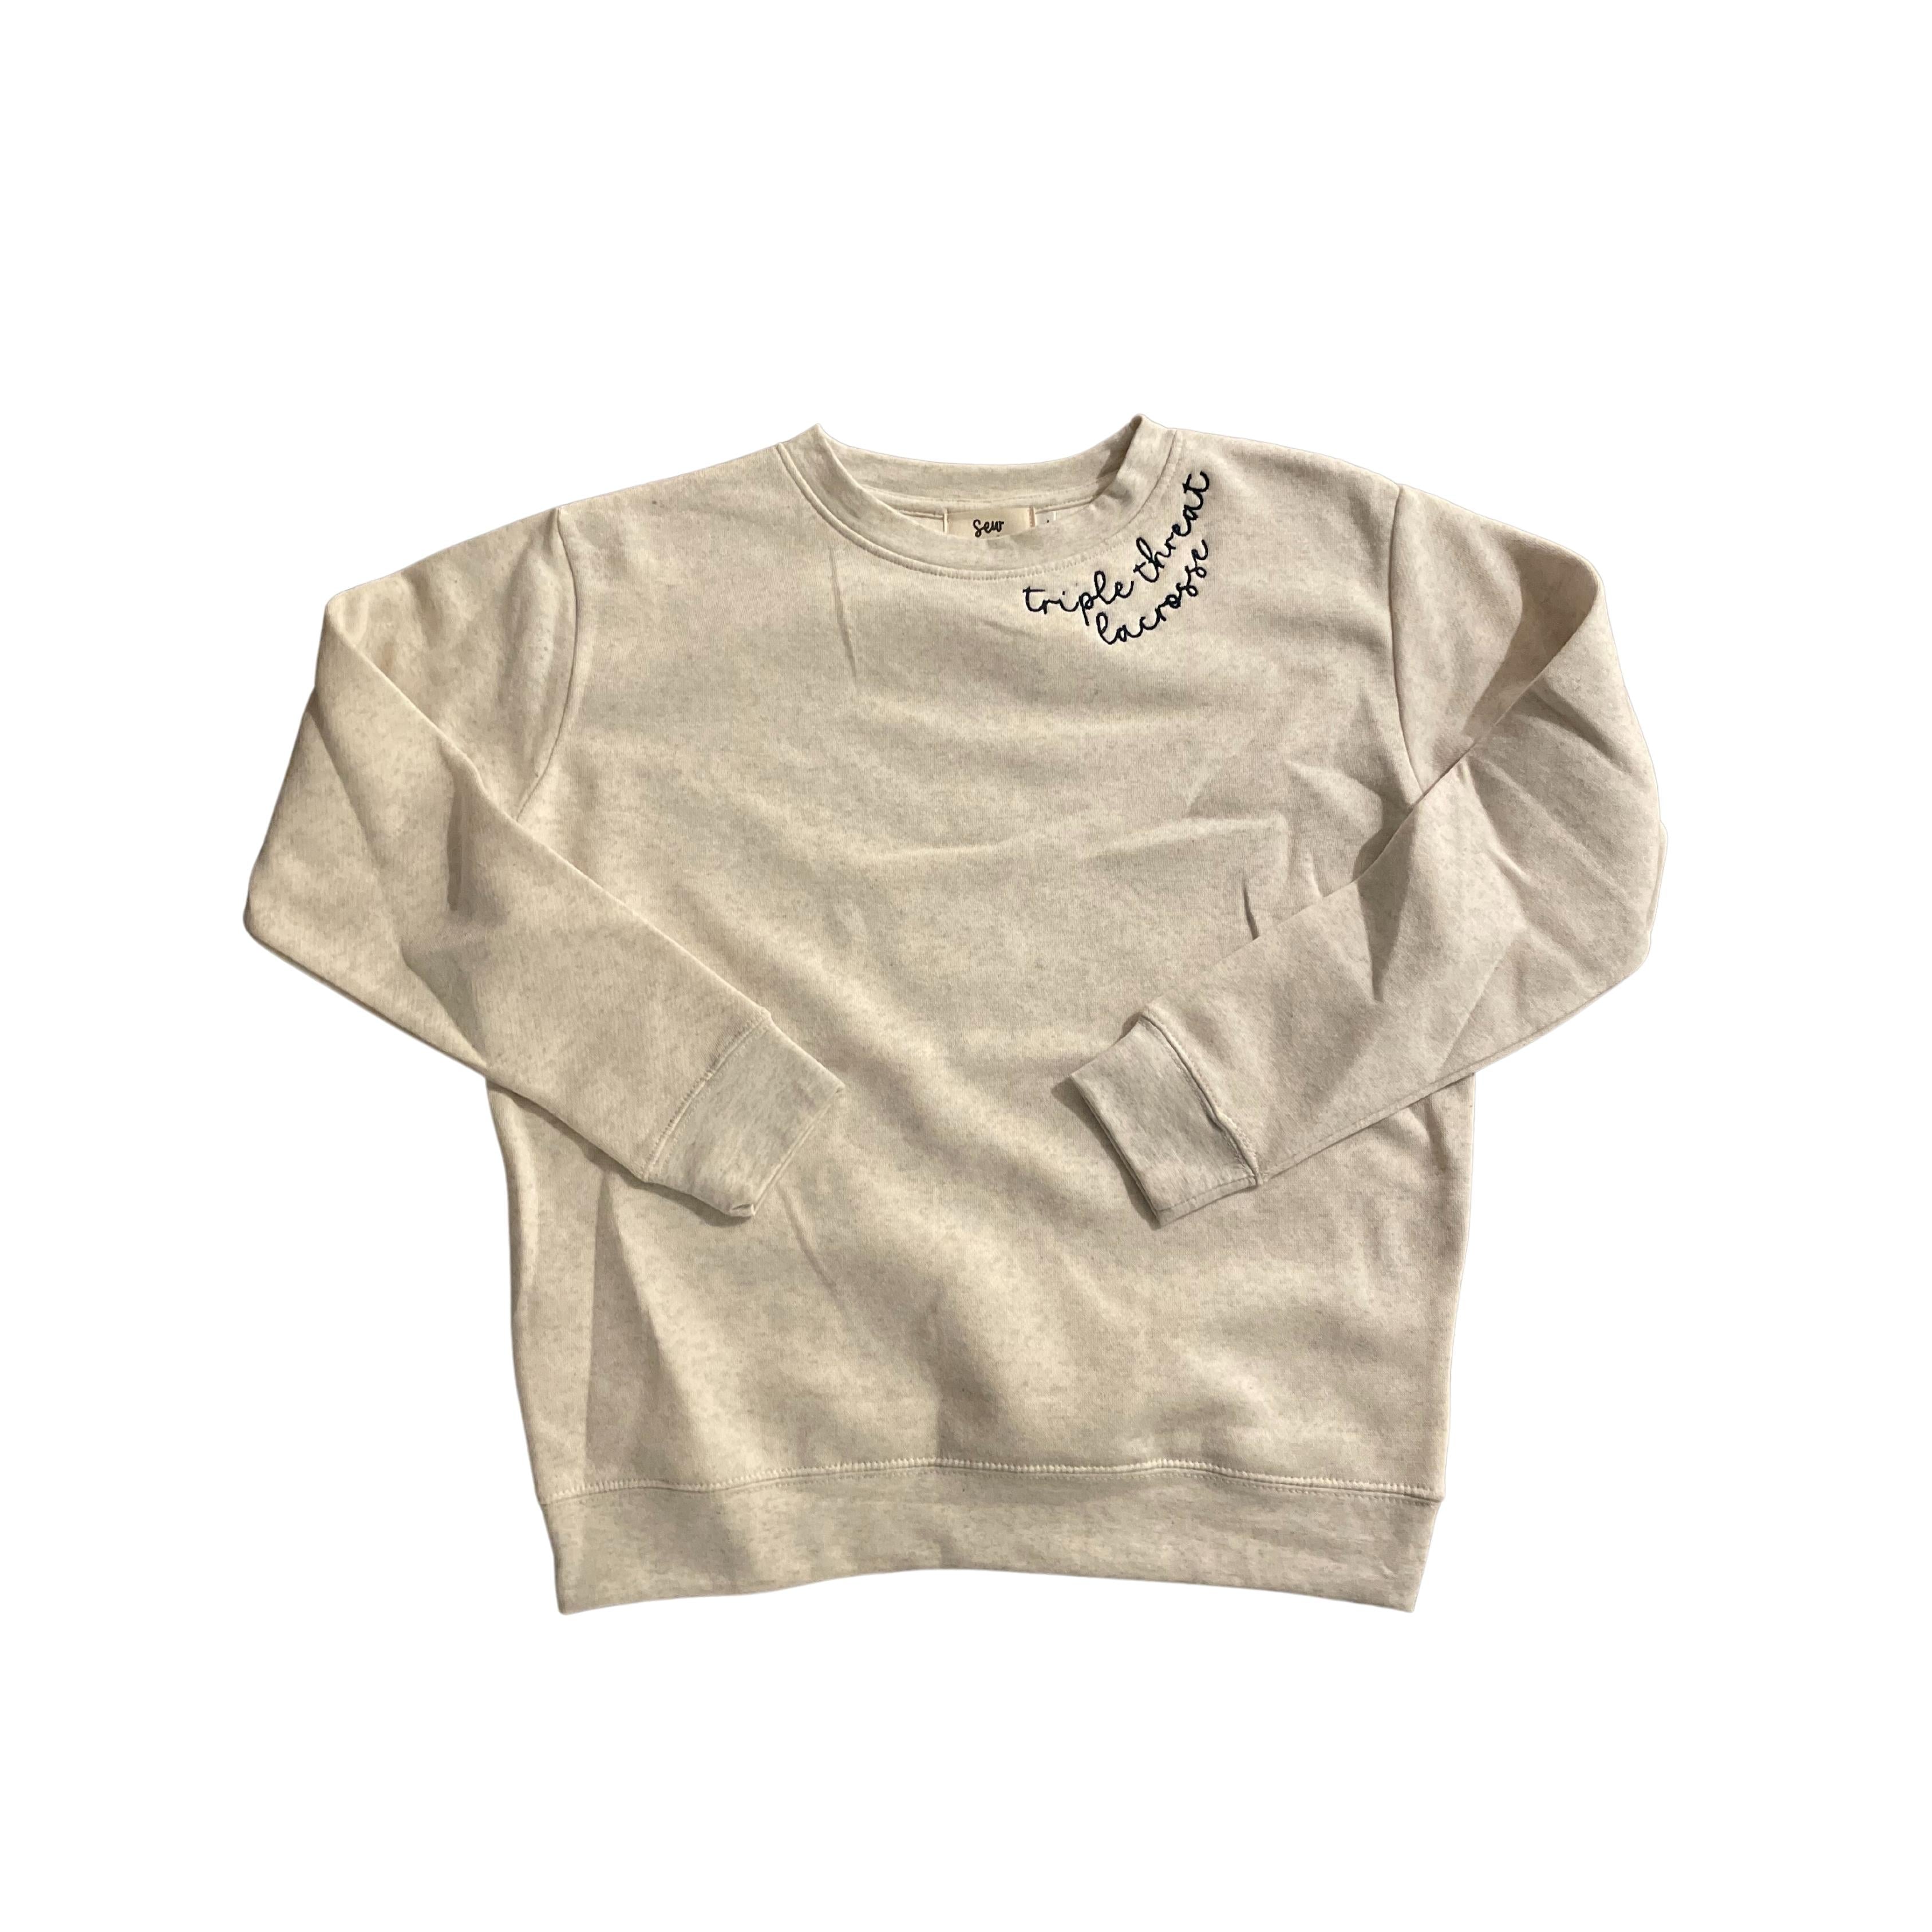 Triple Threat Cream Sweatshirt (Youth)